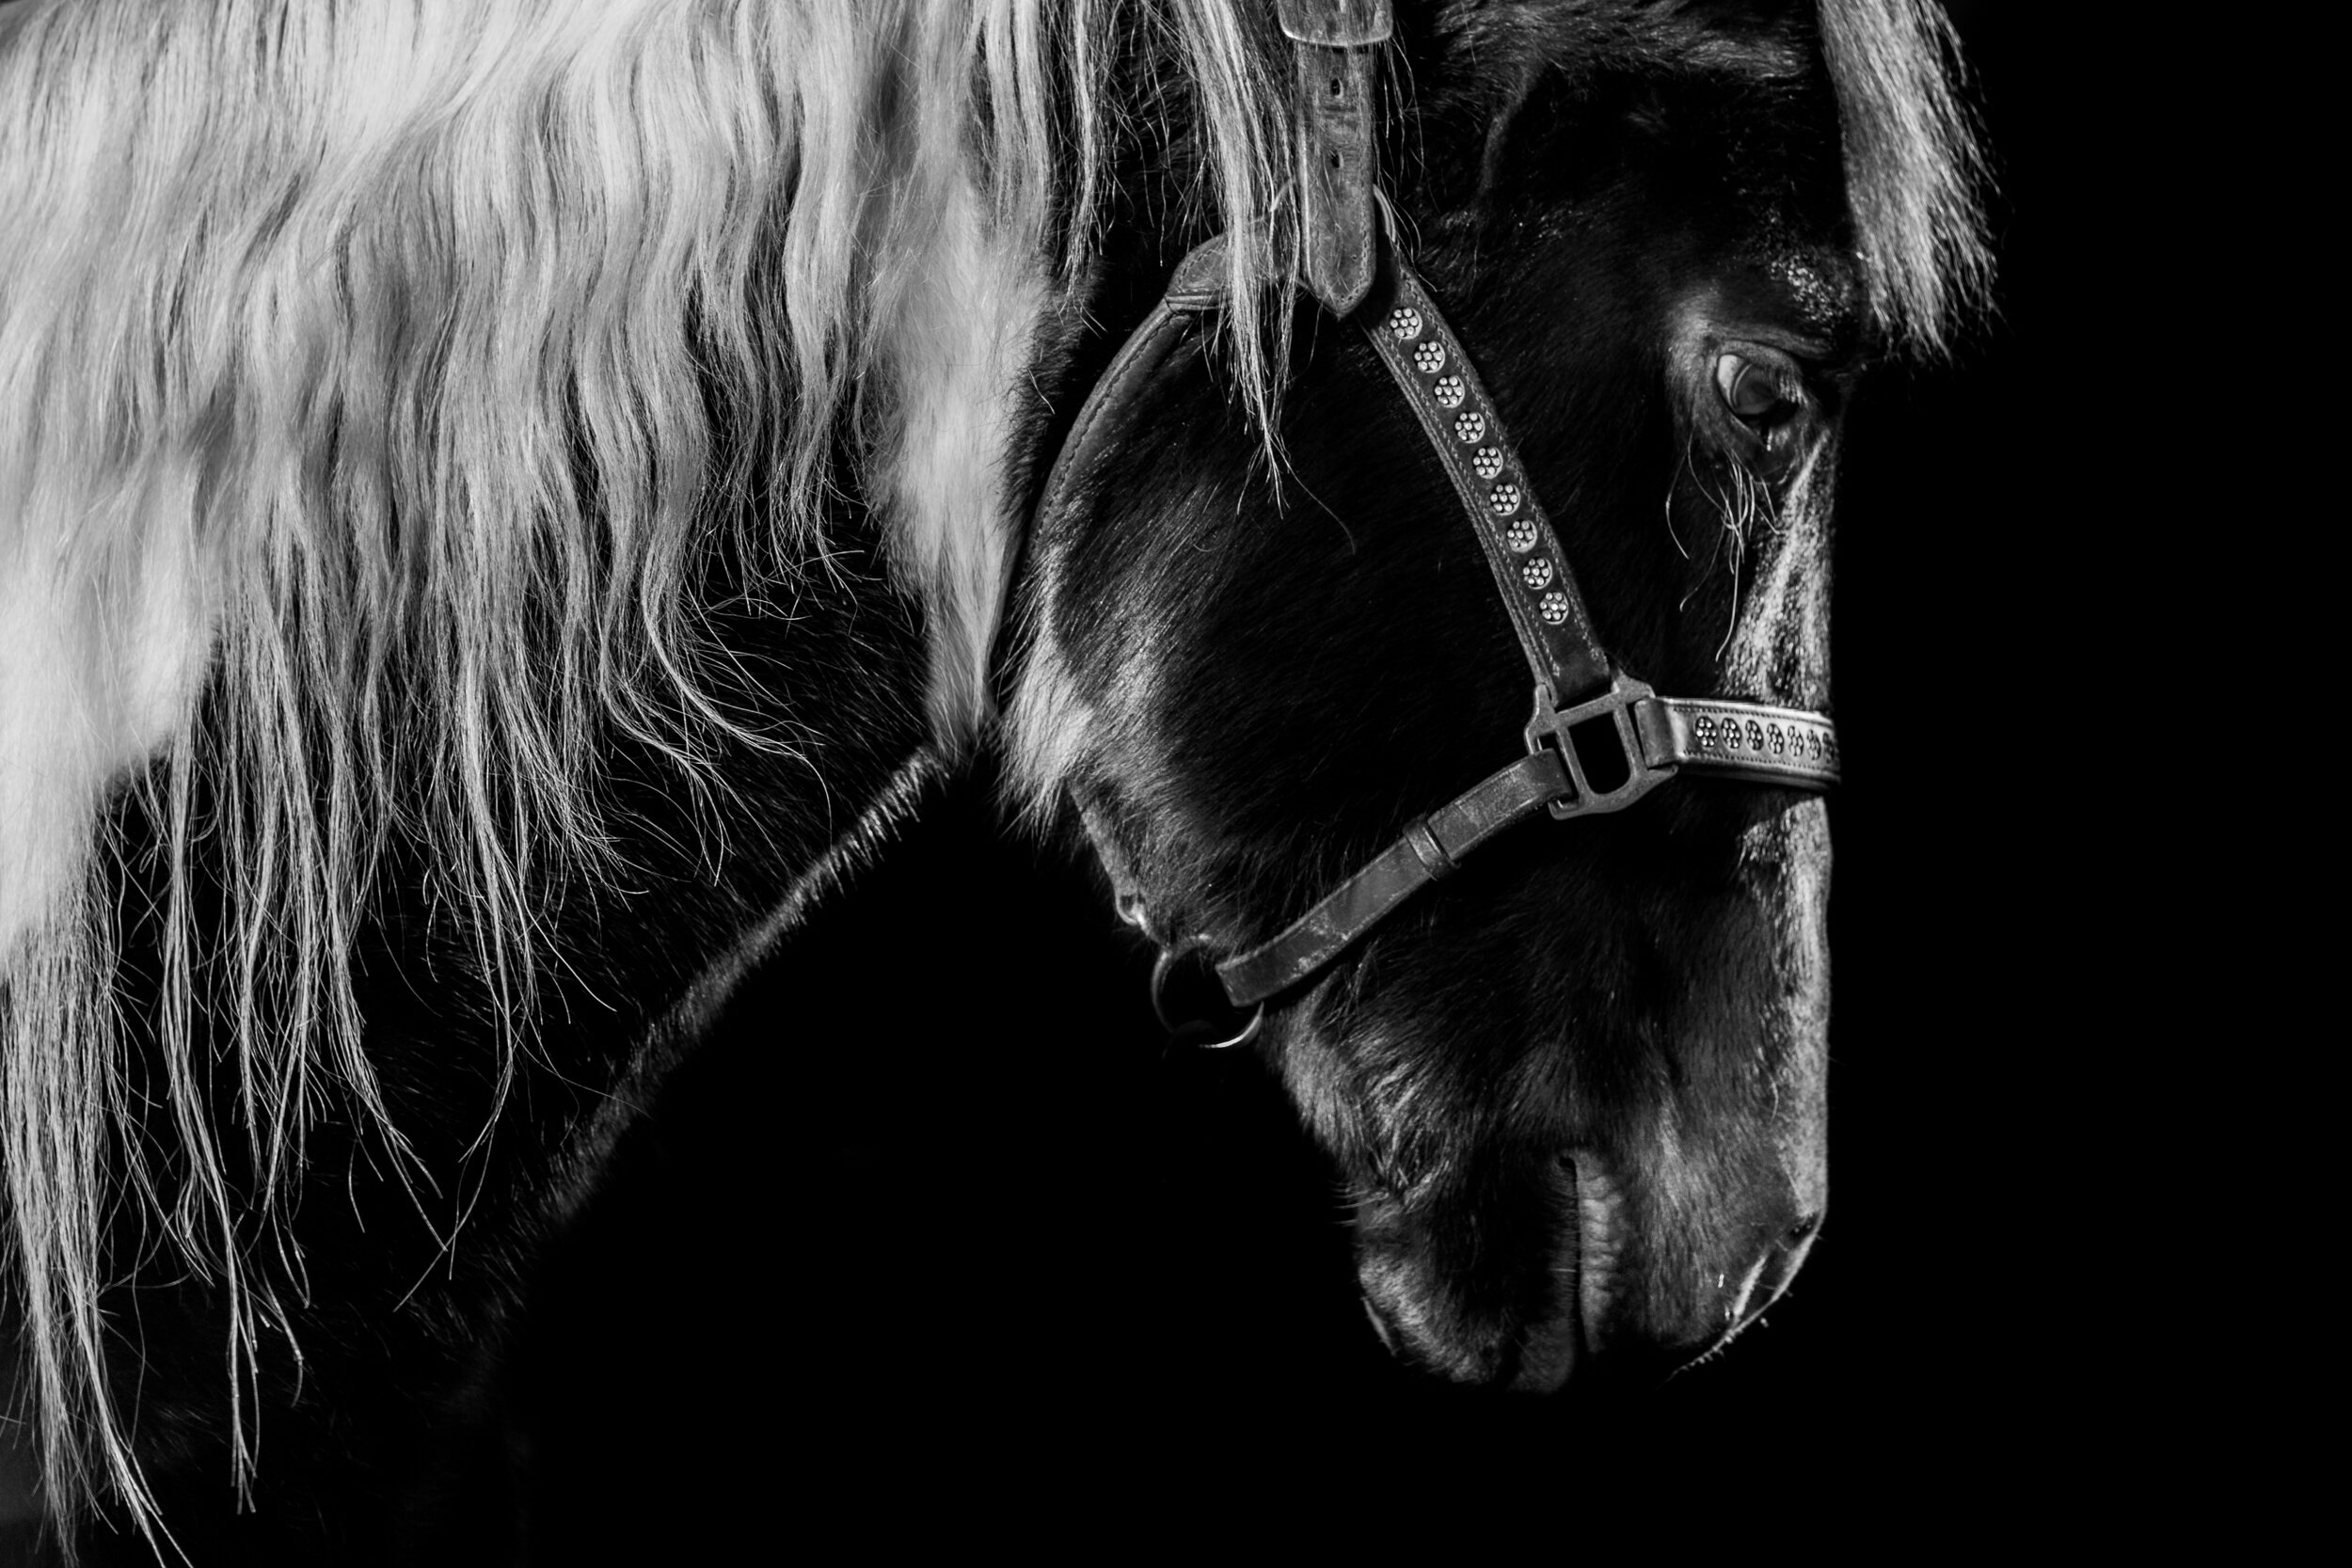 Jane-Sikorski-horse-photographer-6800.jpg